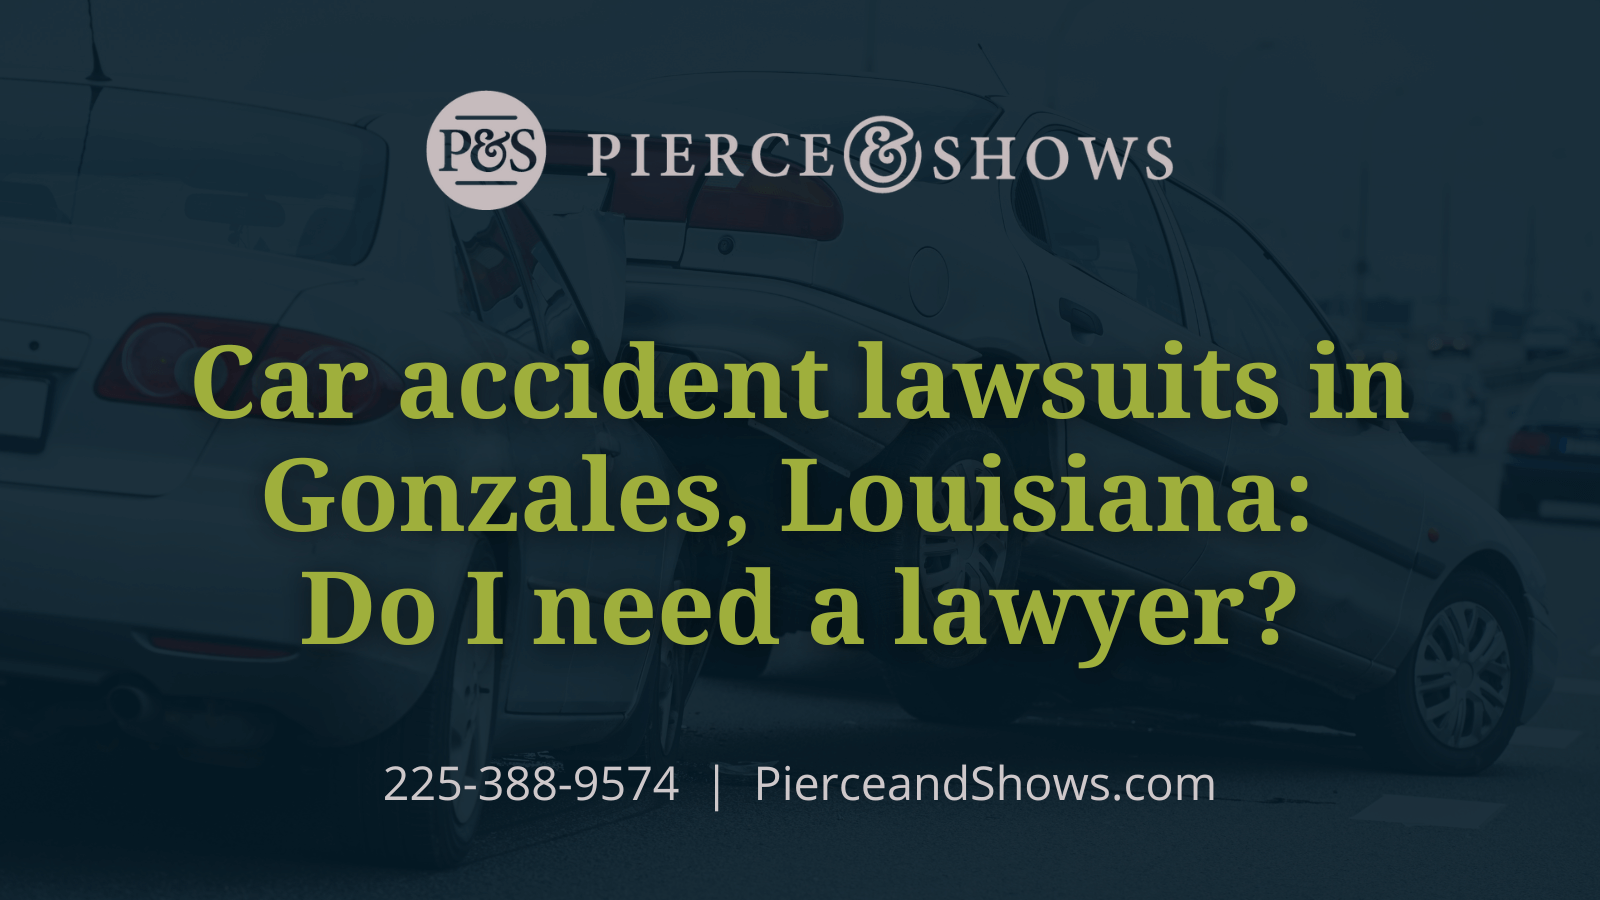 lawsuits in Gonzales, Louisiana - Baton Rouge Louisiana injury attorney Pierce & Shows